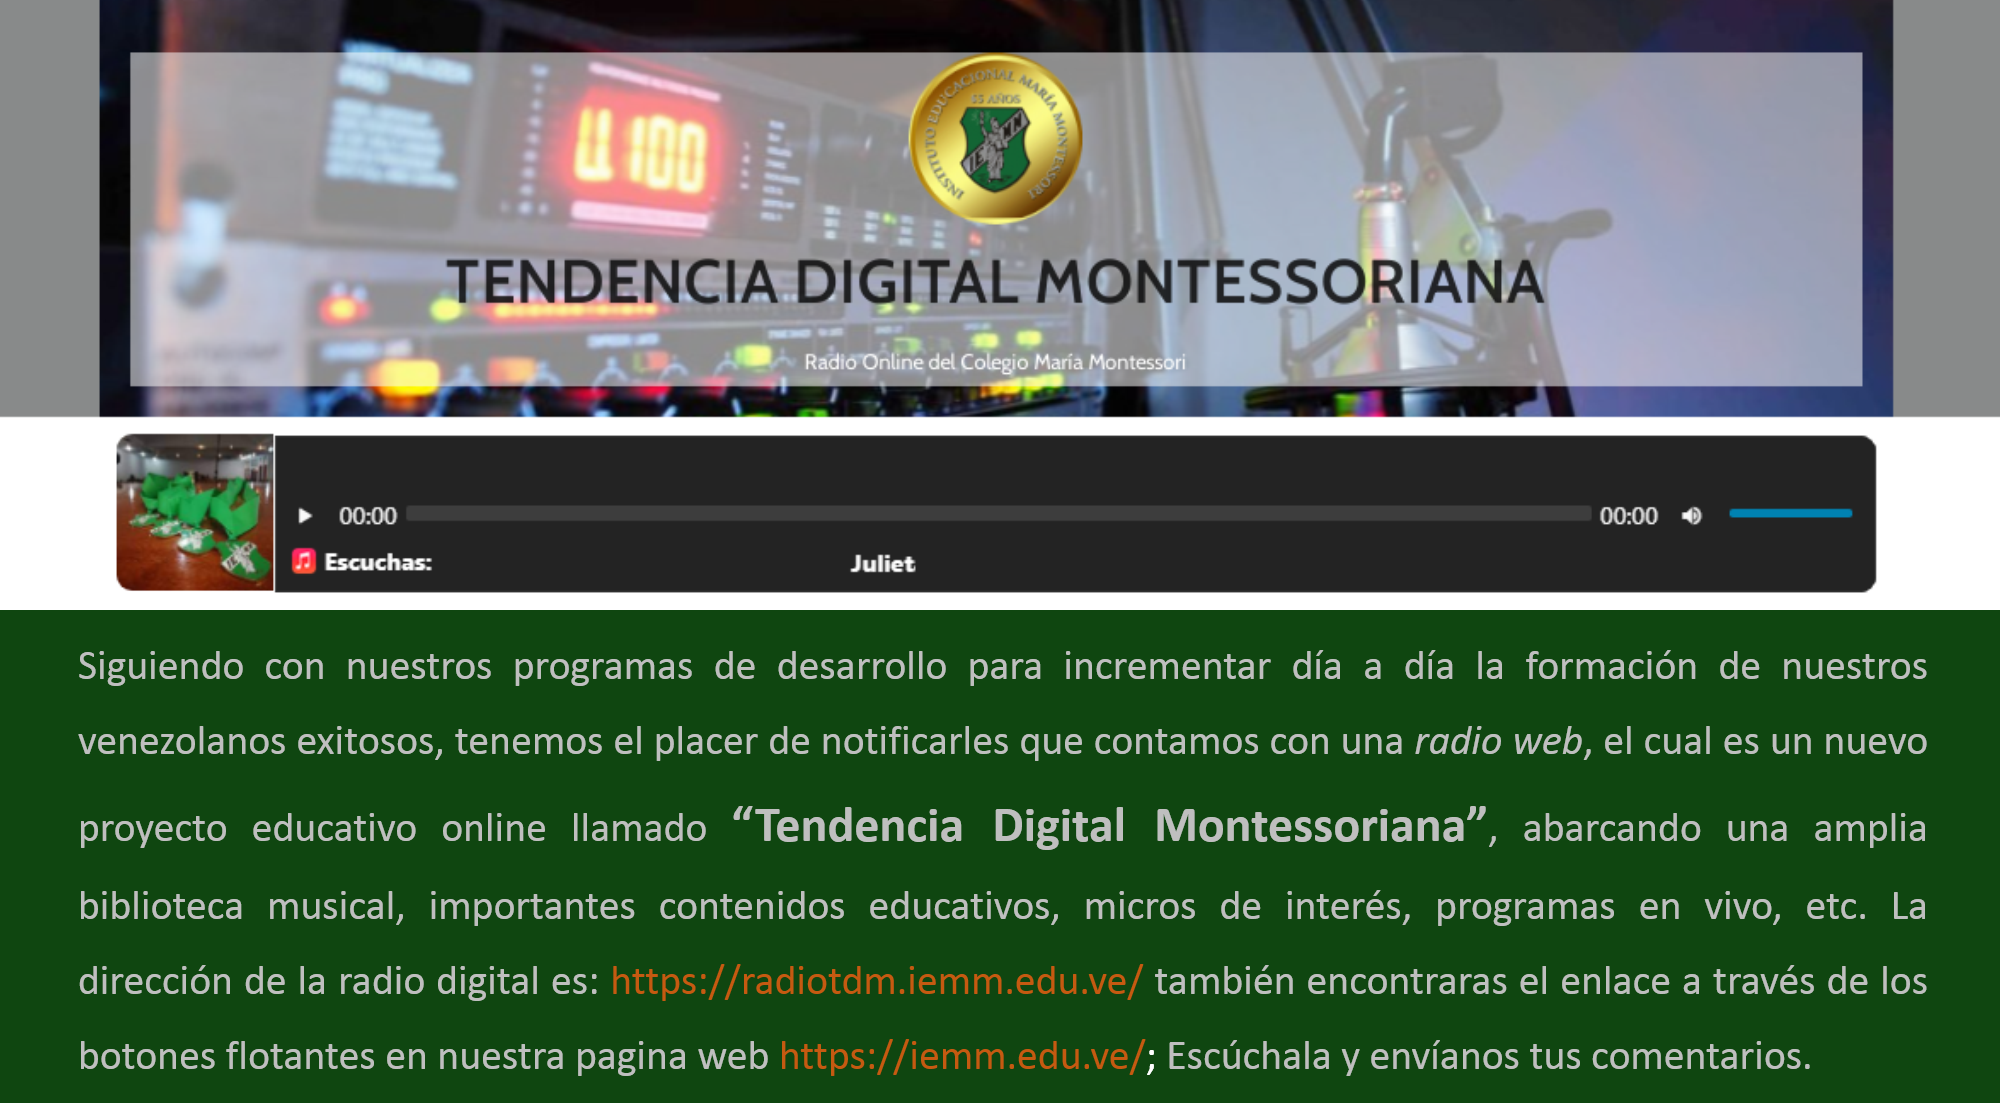 Radio Online "Tendencia Digital Montessoriana"